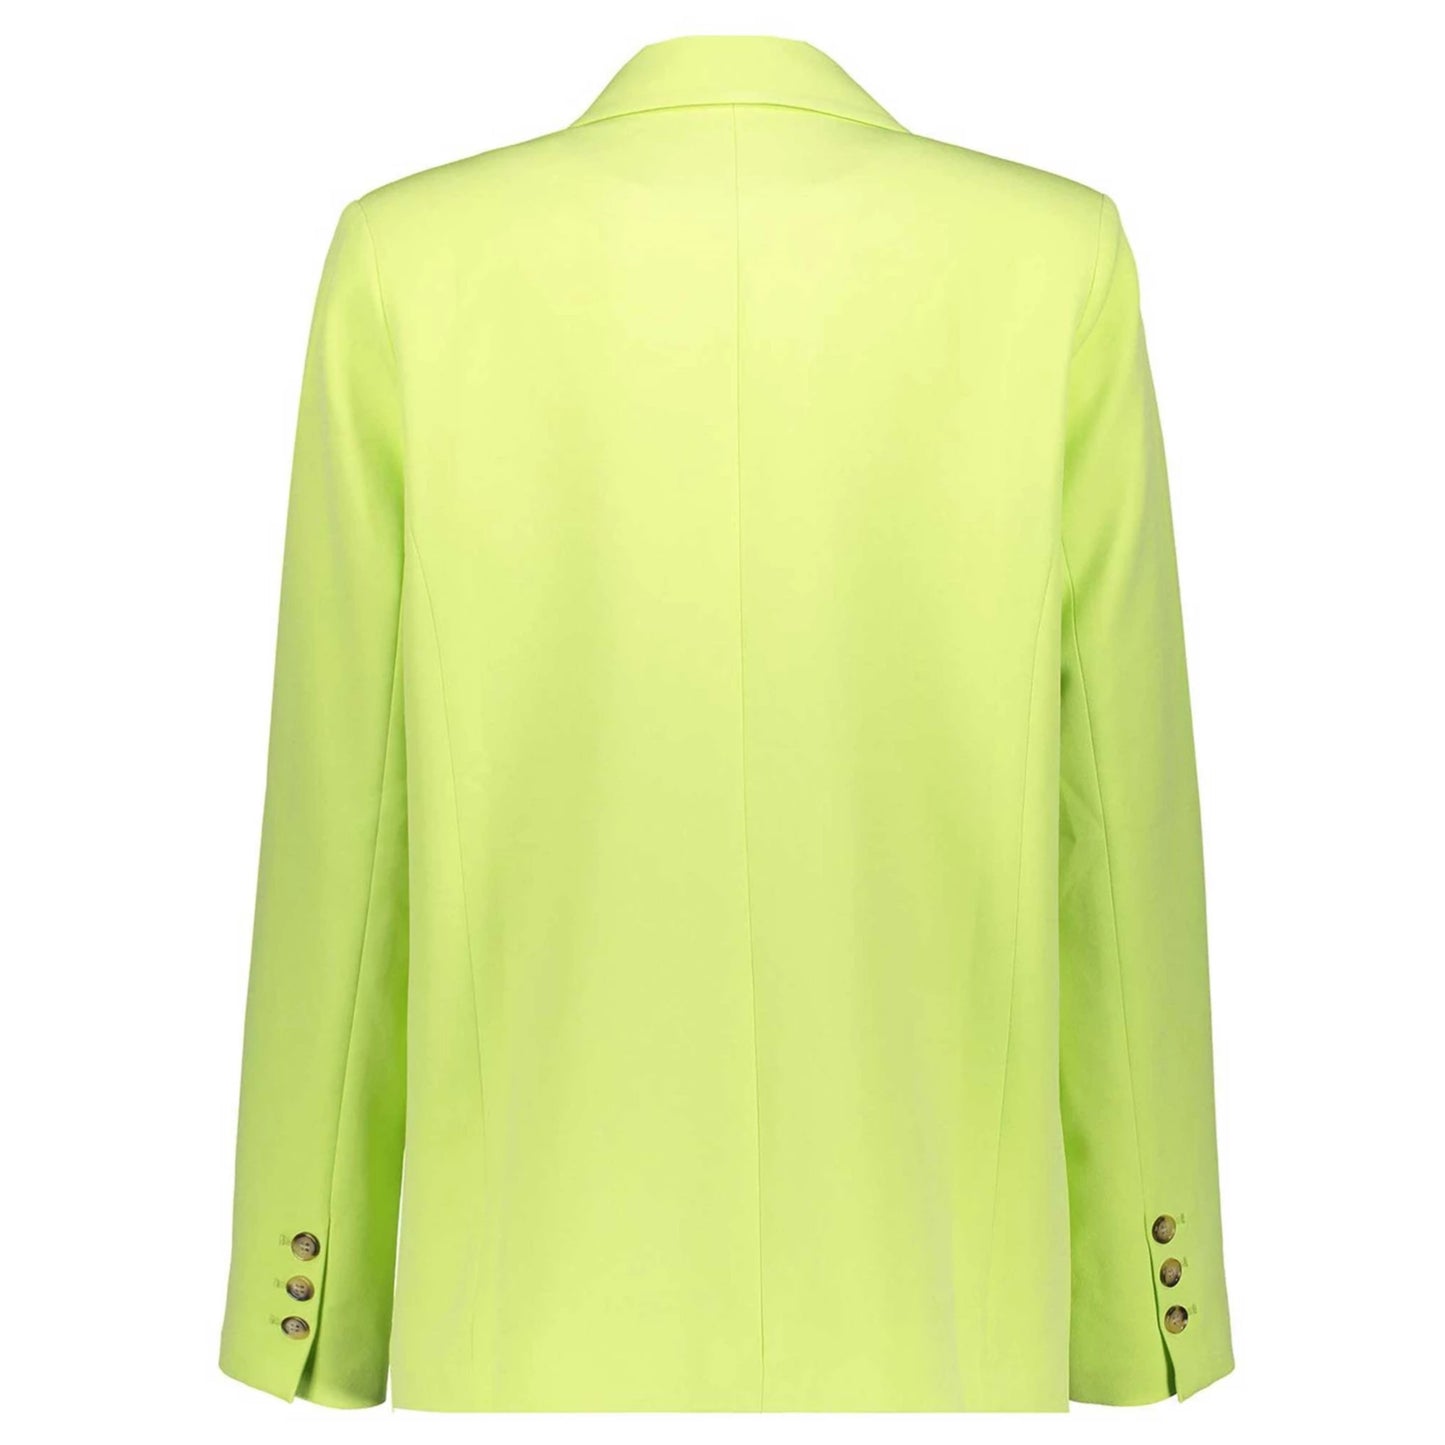 Geisha Blazer Solid Lime - Peet kleding